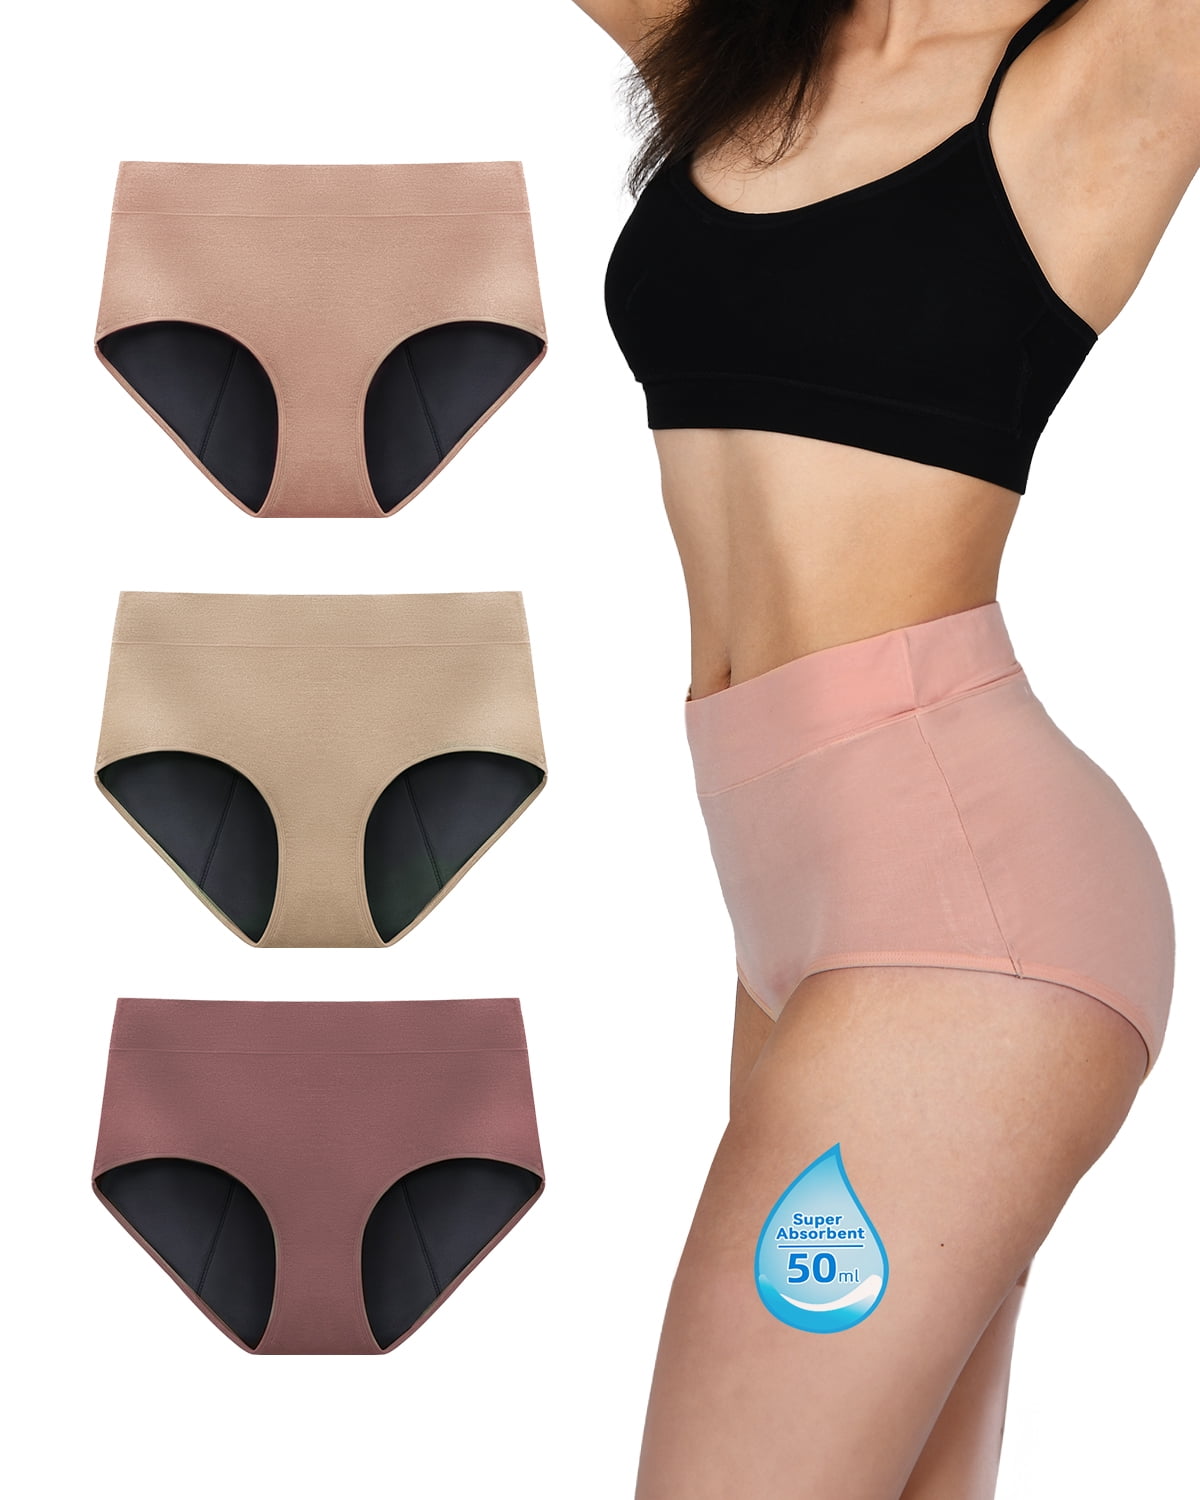 PULIOU Period Underwear for Women Heavy Flow High Waisted Menstrual Panties  Teens Cotton Postpartum Hipster 3 Pack